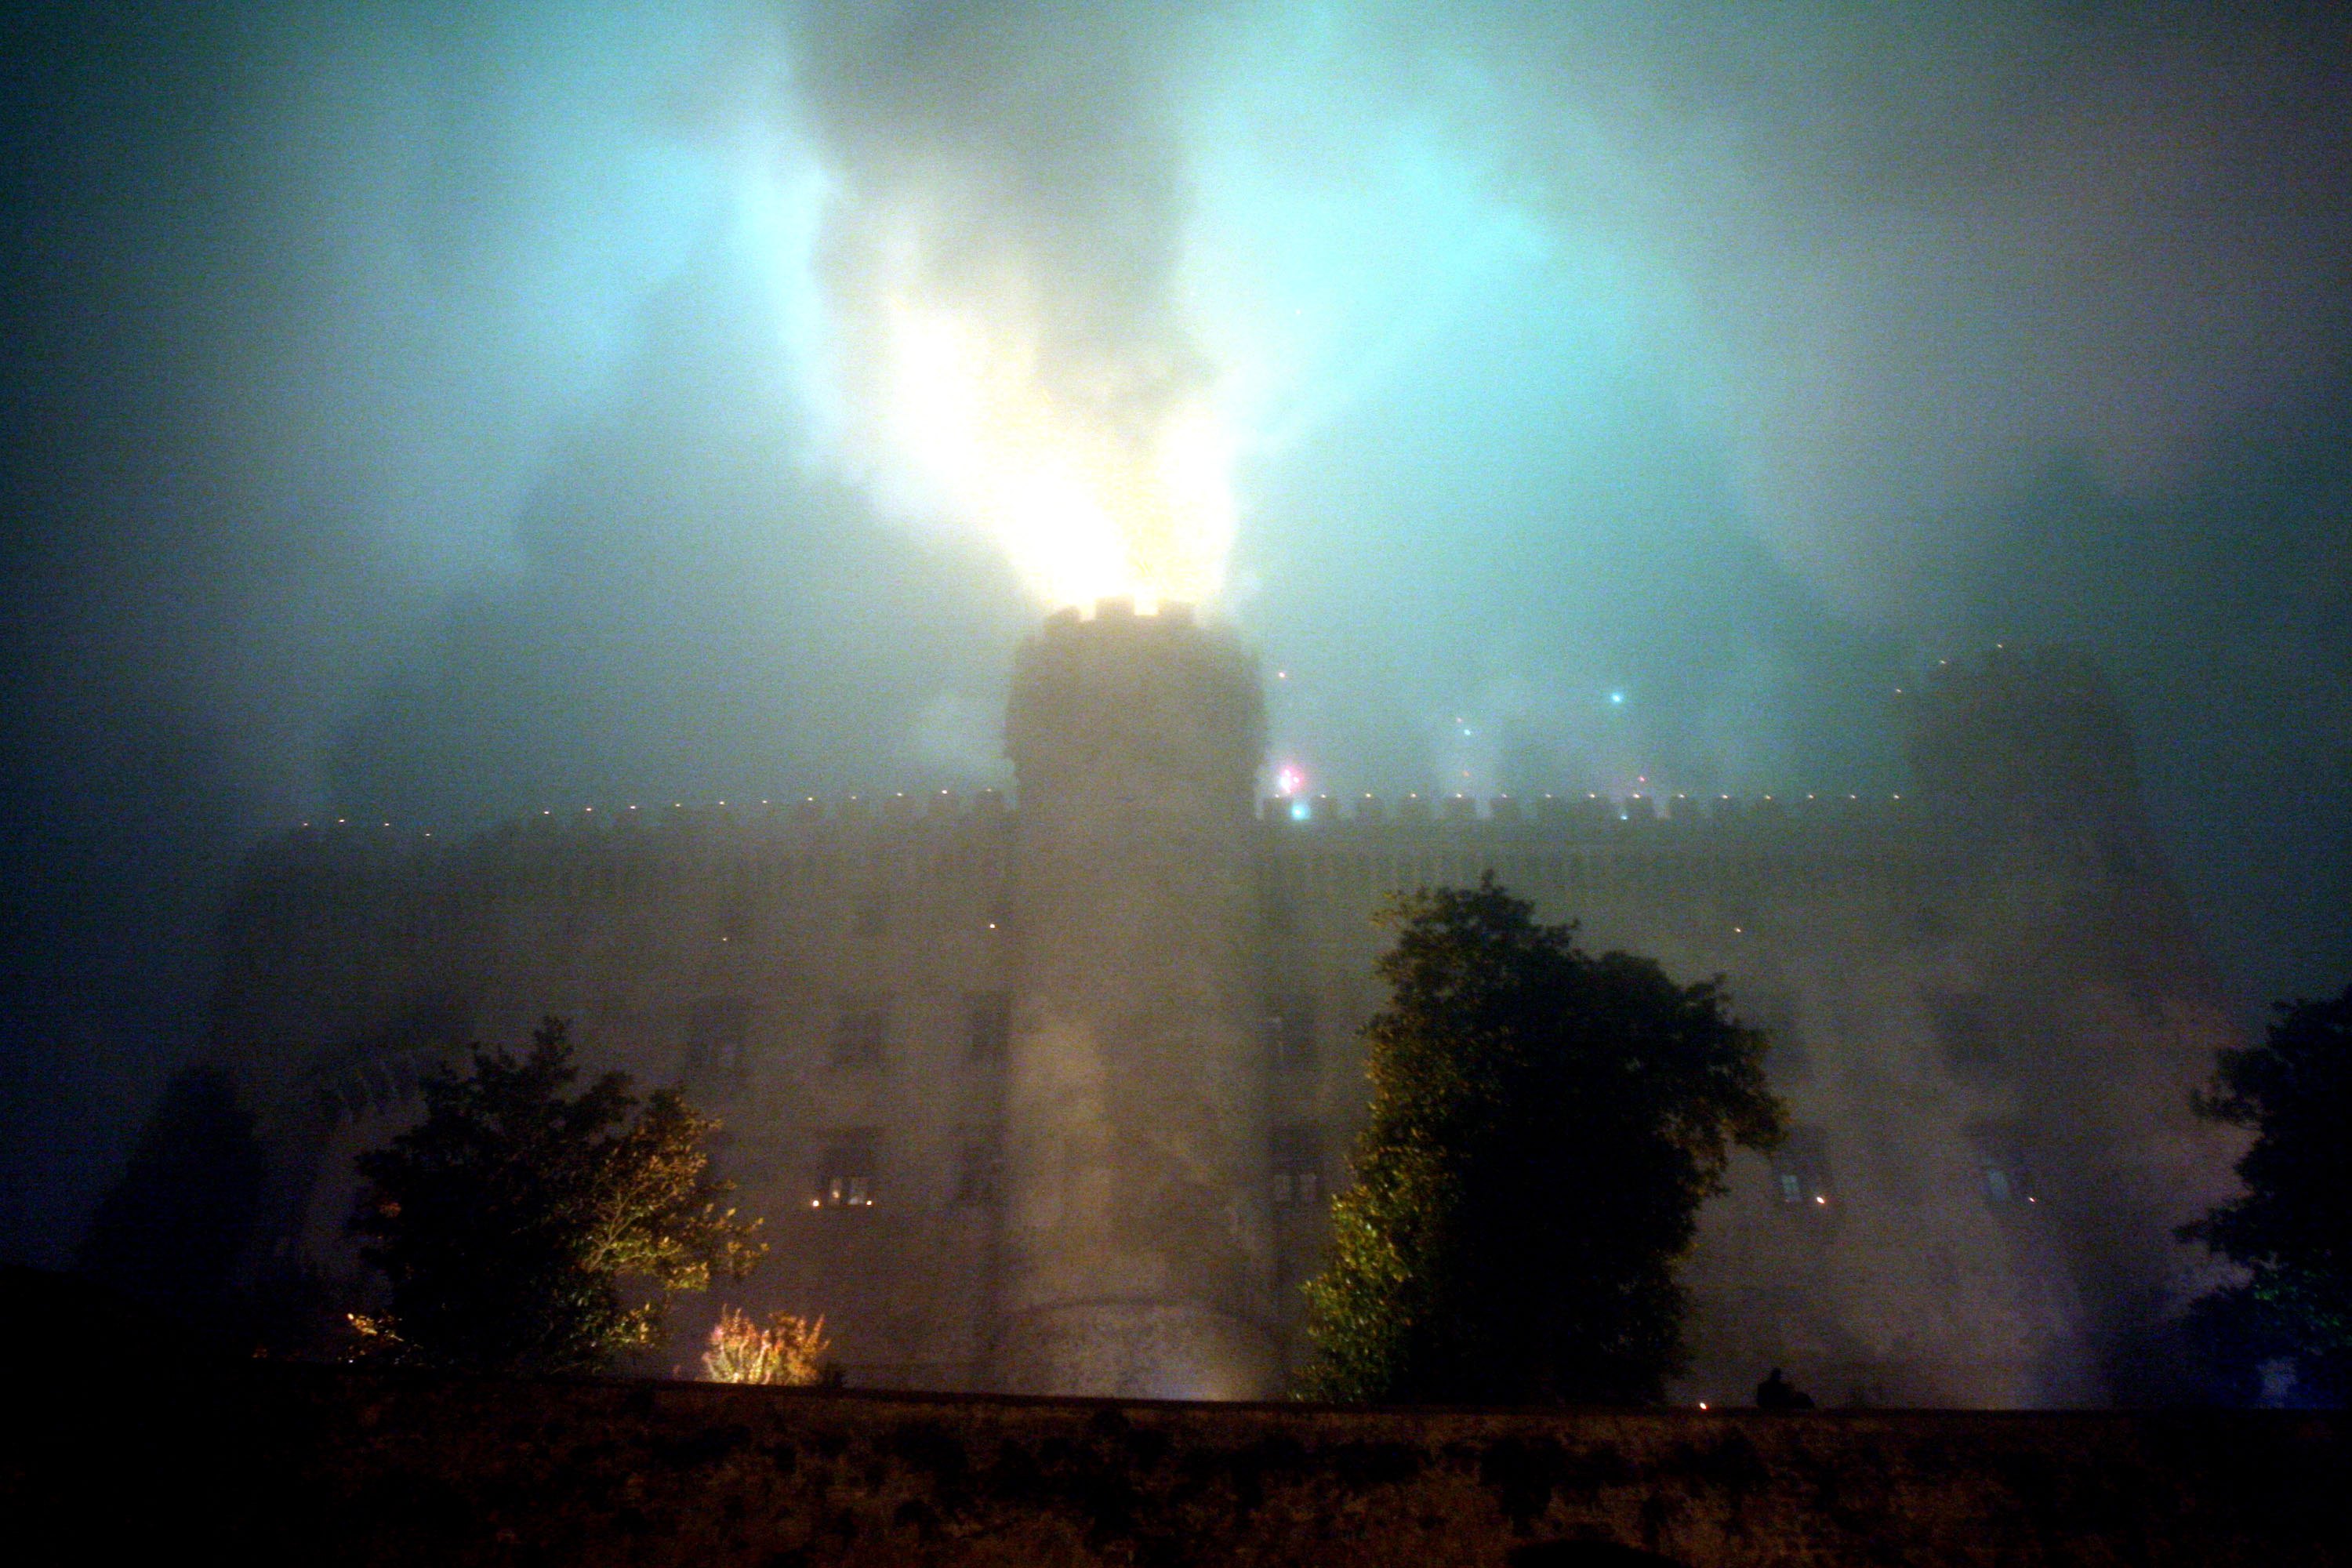 Castello Odescalchi on November 18, 2006 in Bracciano, Italy | Source: Getty Images